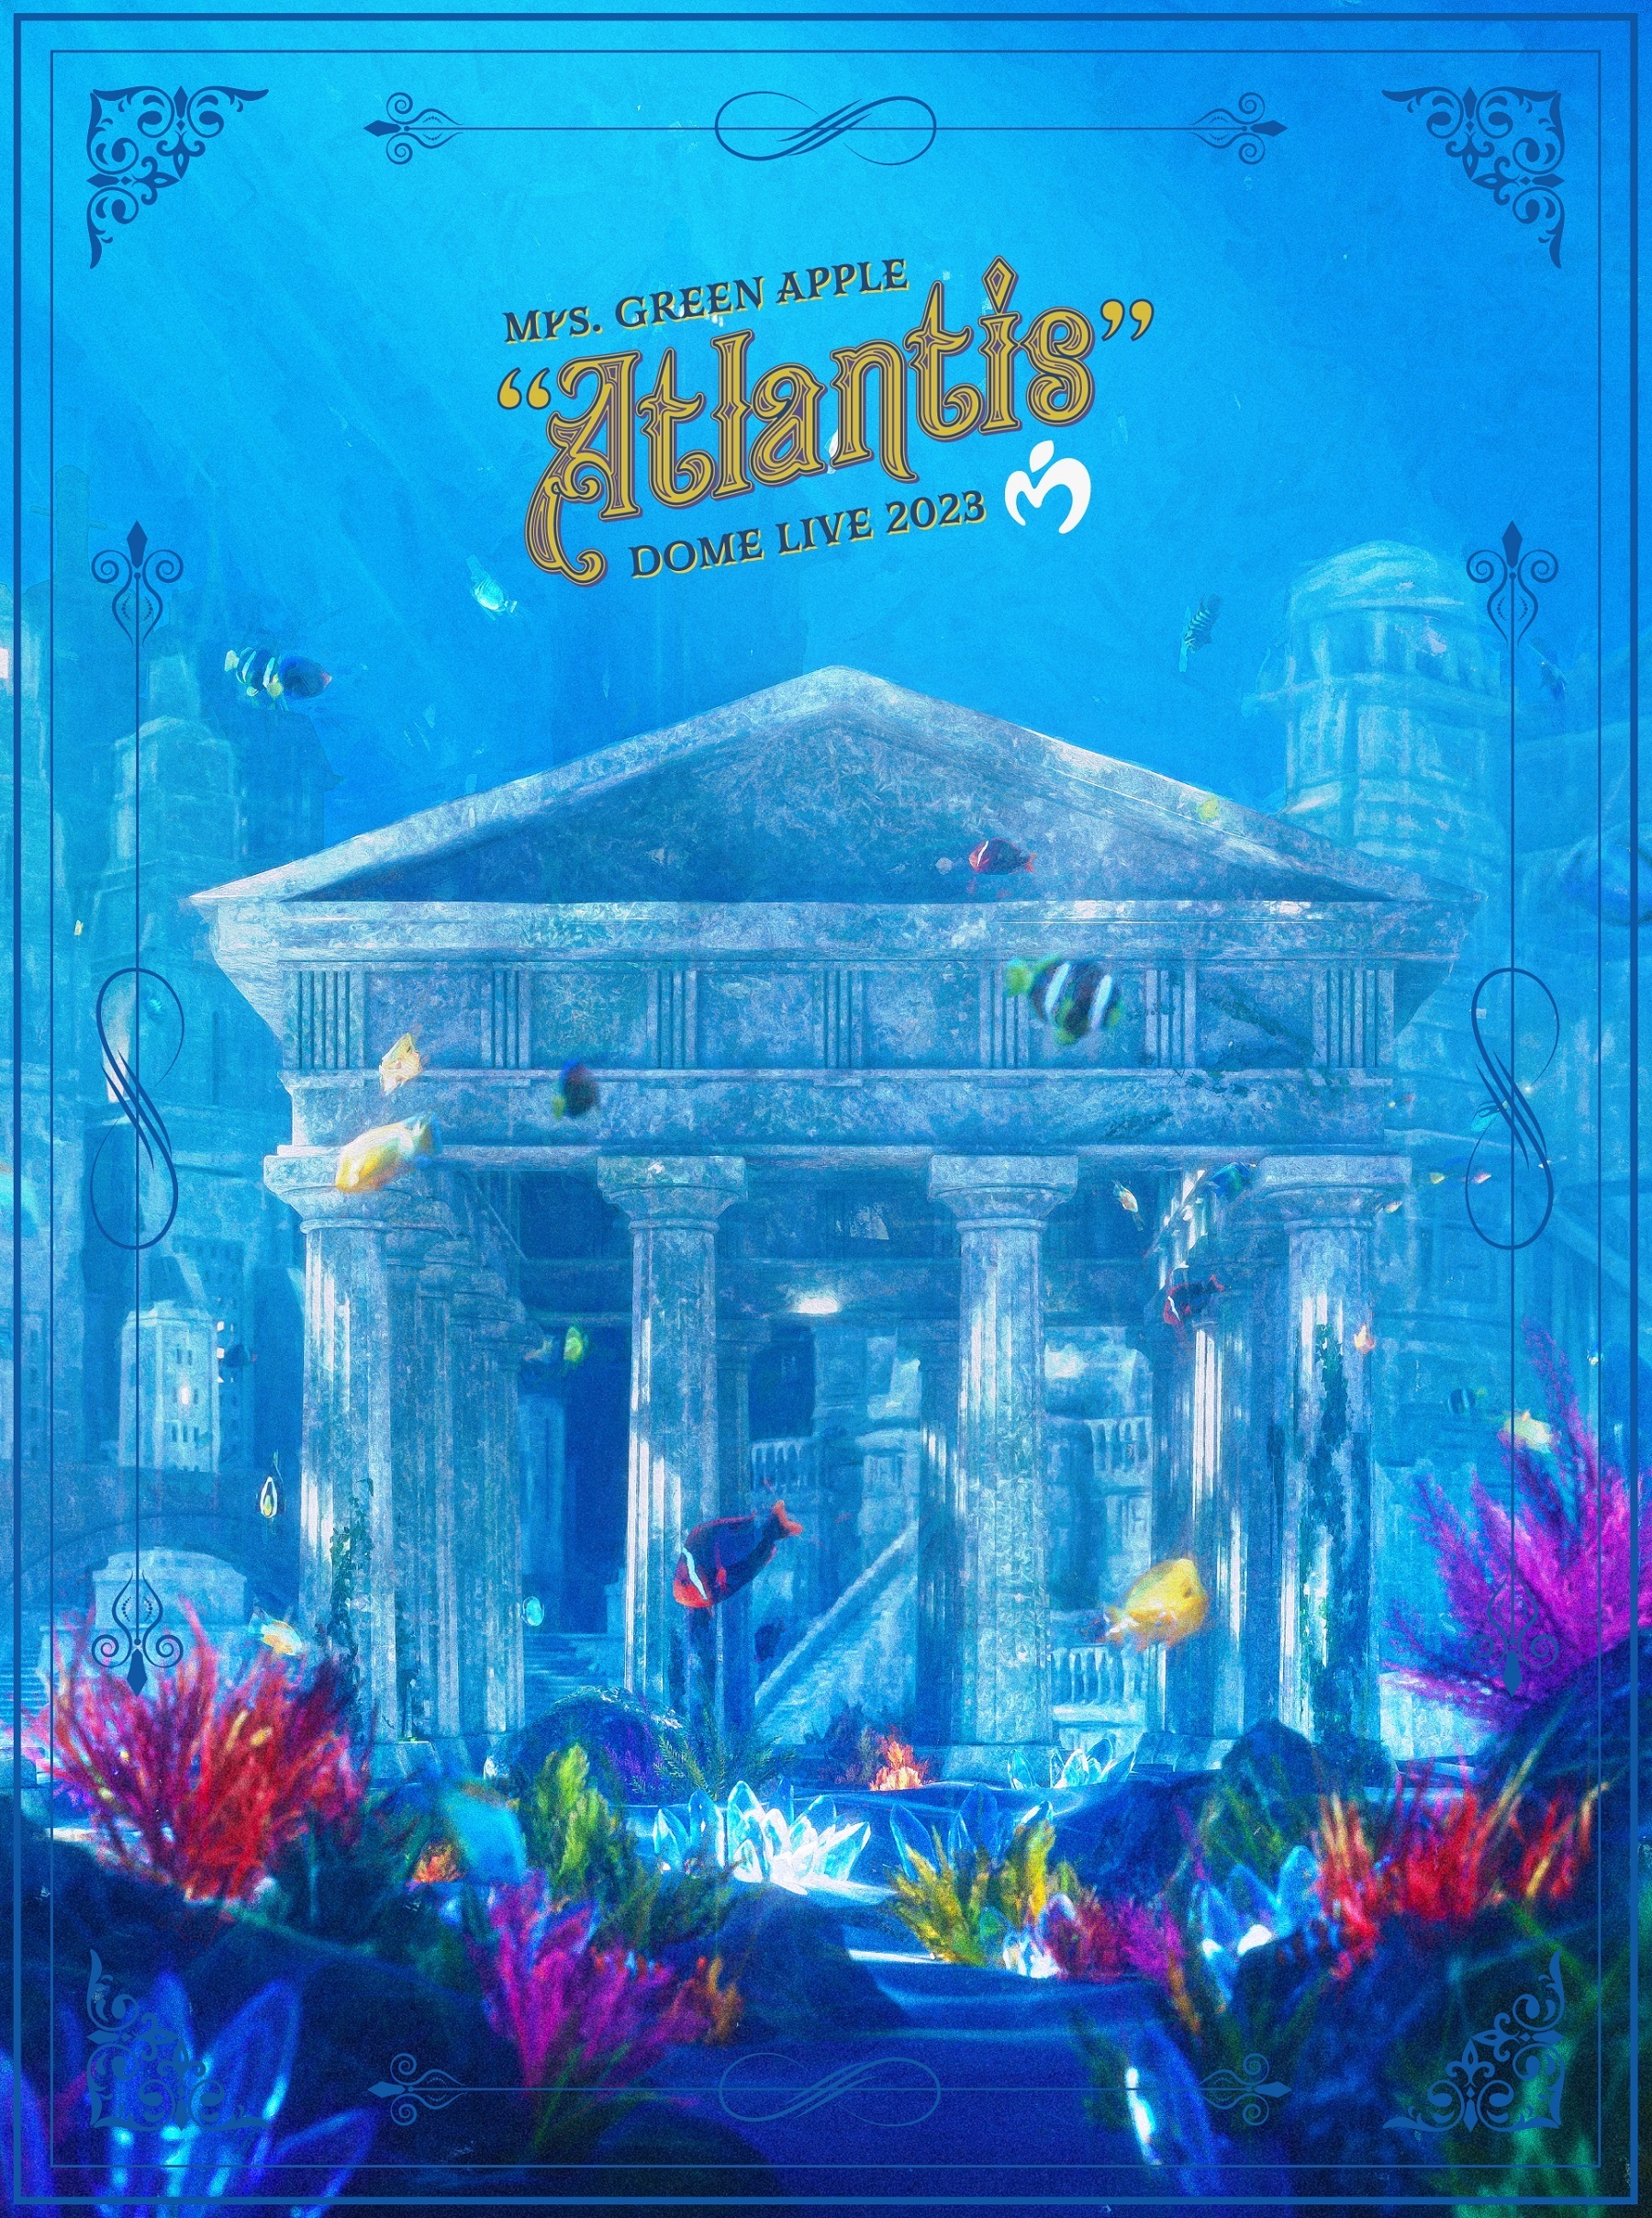 DOME LIVE 2023 “Atlantis” (Regular Edition) -Mrs. GREEN APPLE 